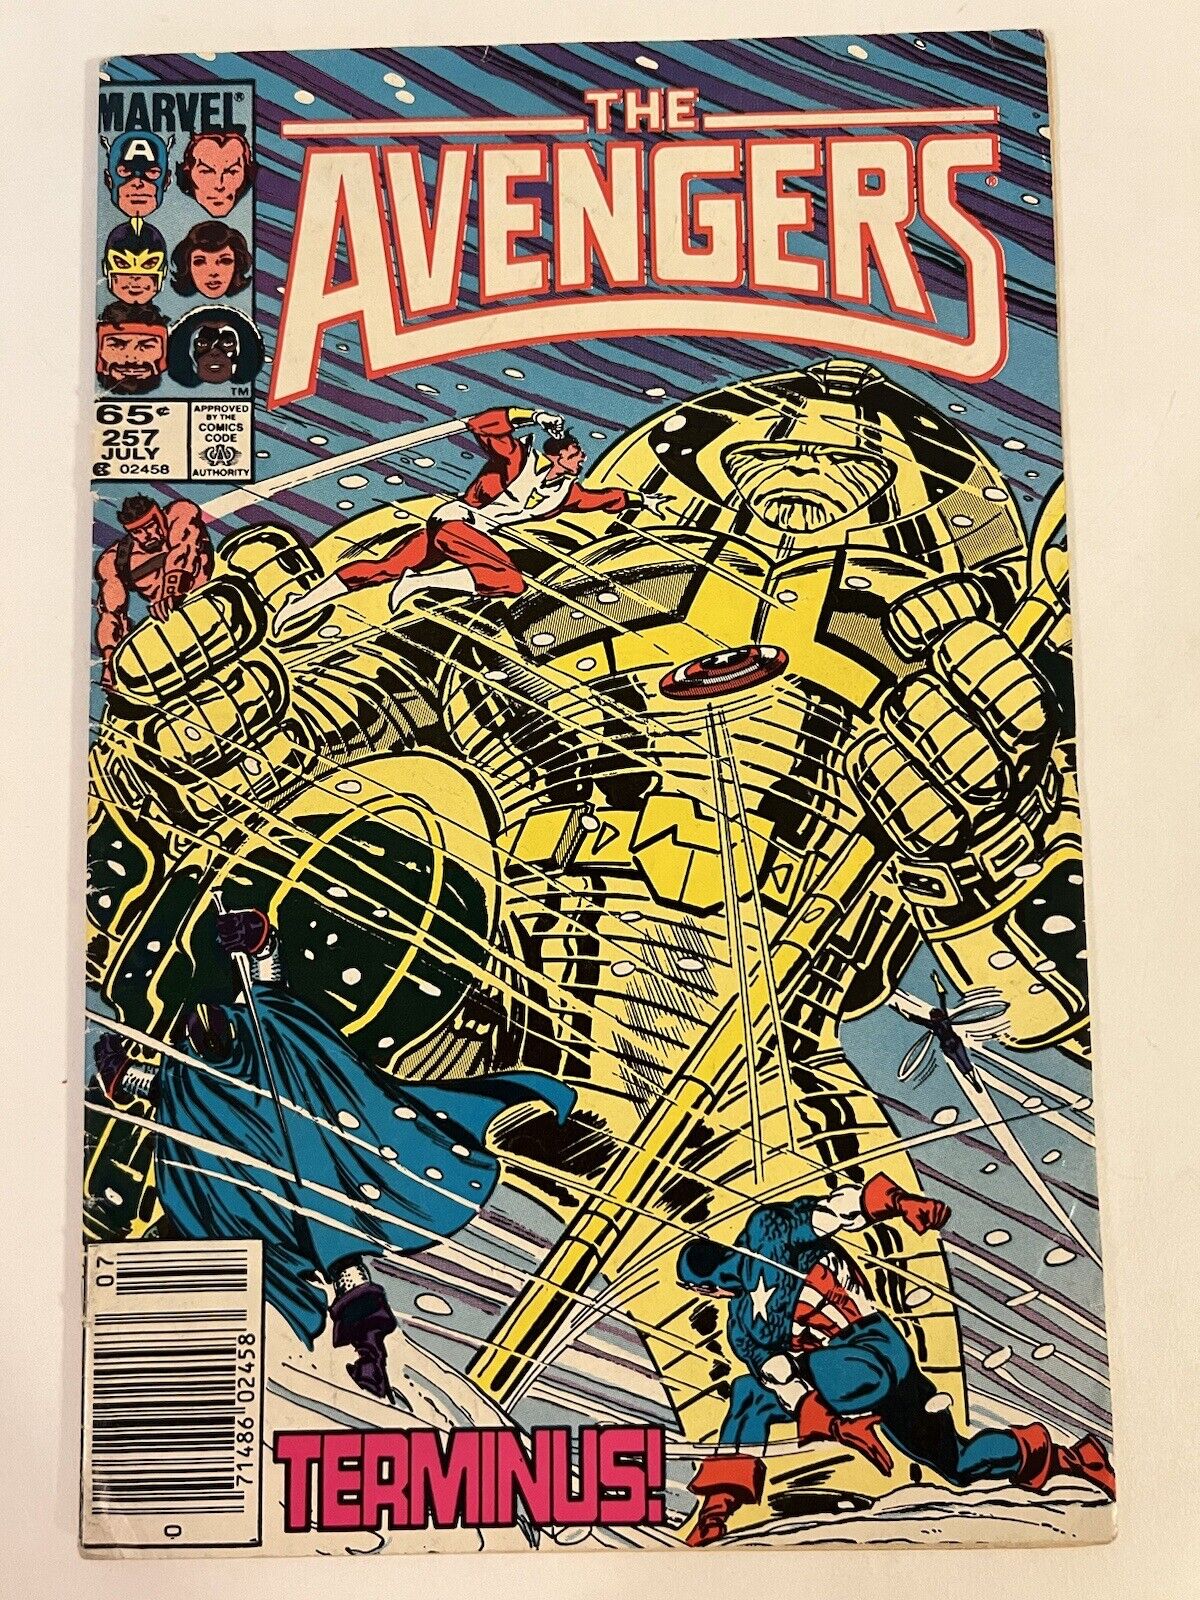 Marvel Comics The Mighty Avengers #257 Terminus” July 1985 Copper Era